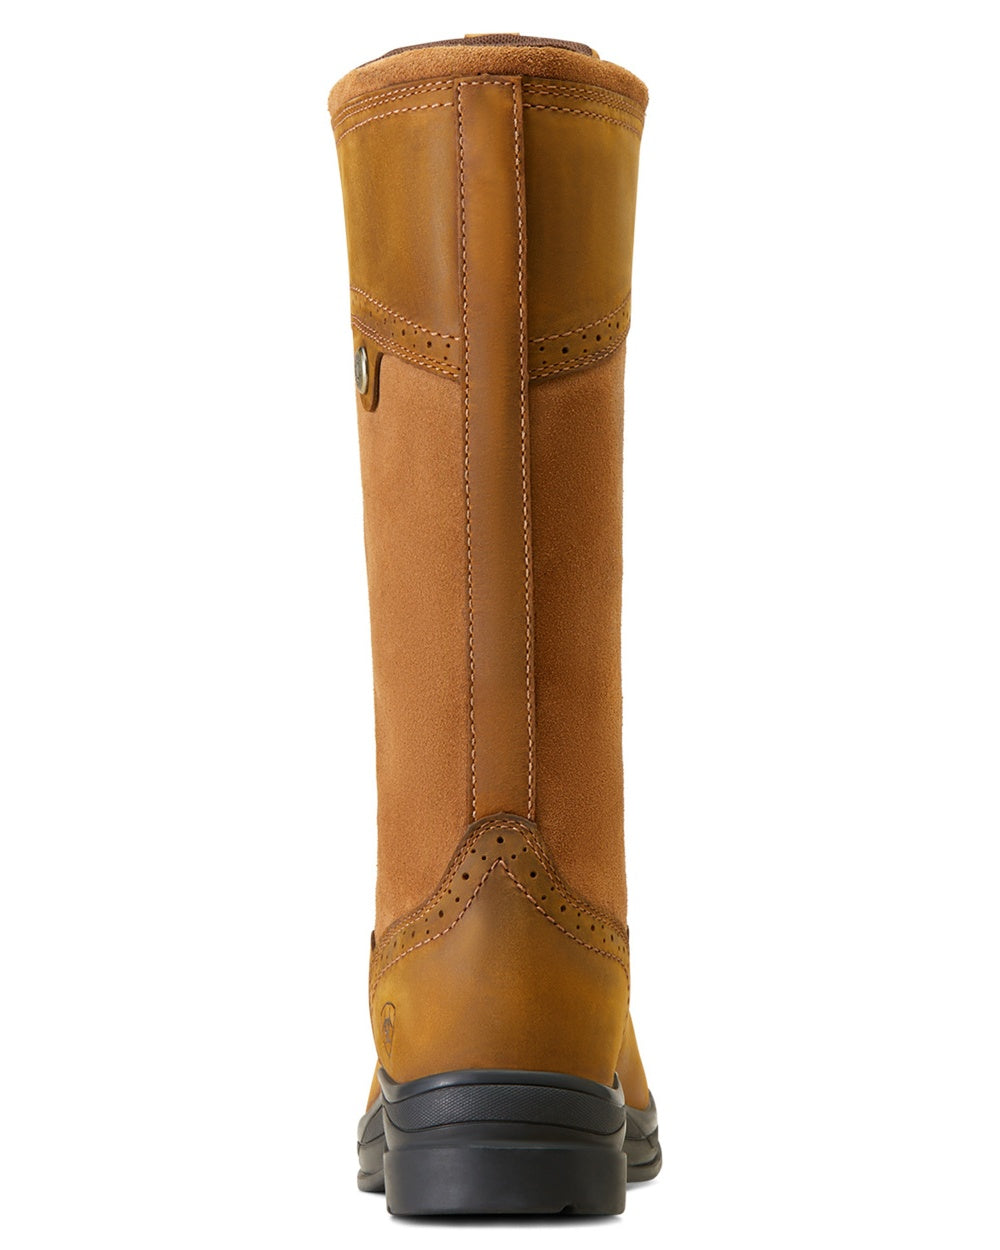 Ariat Womens Wythburn II Waterproof Boots in Weathered Brown